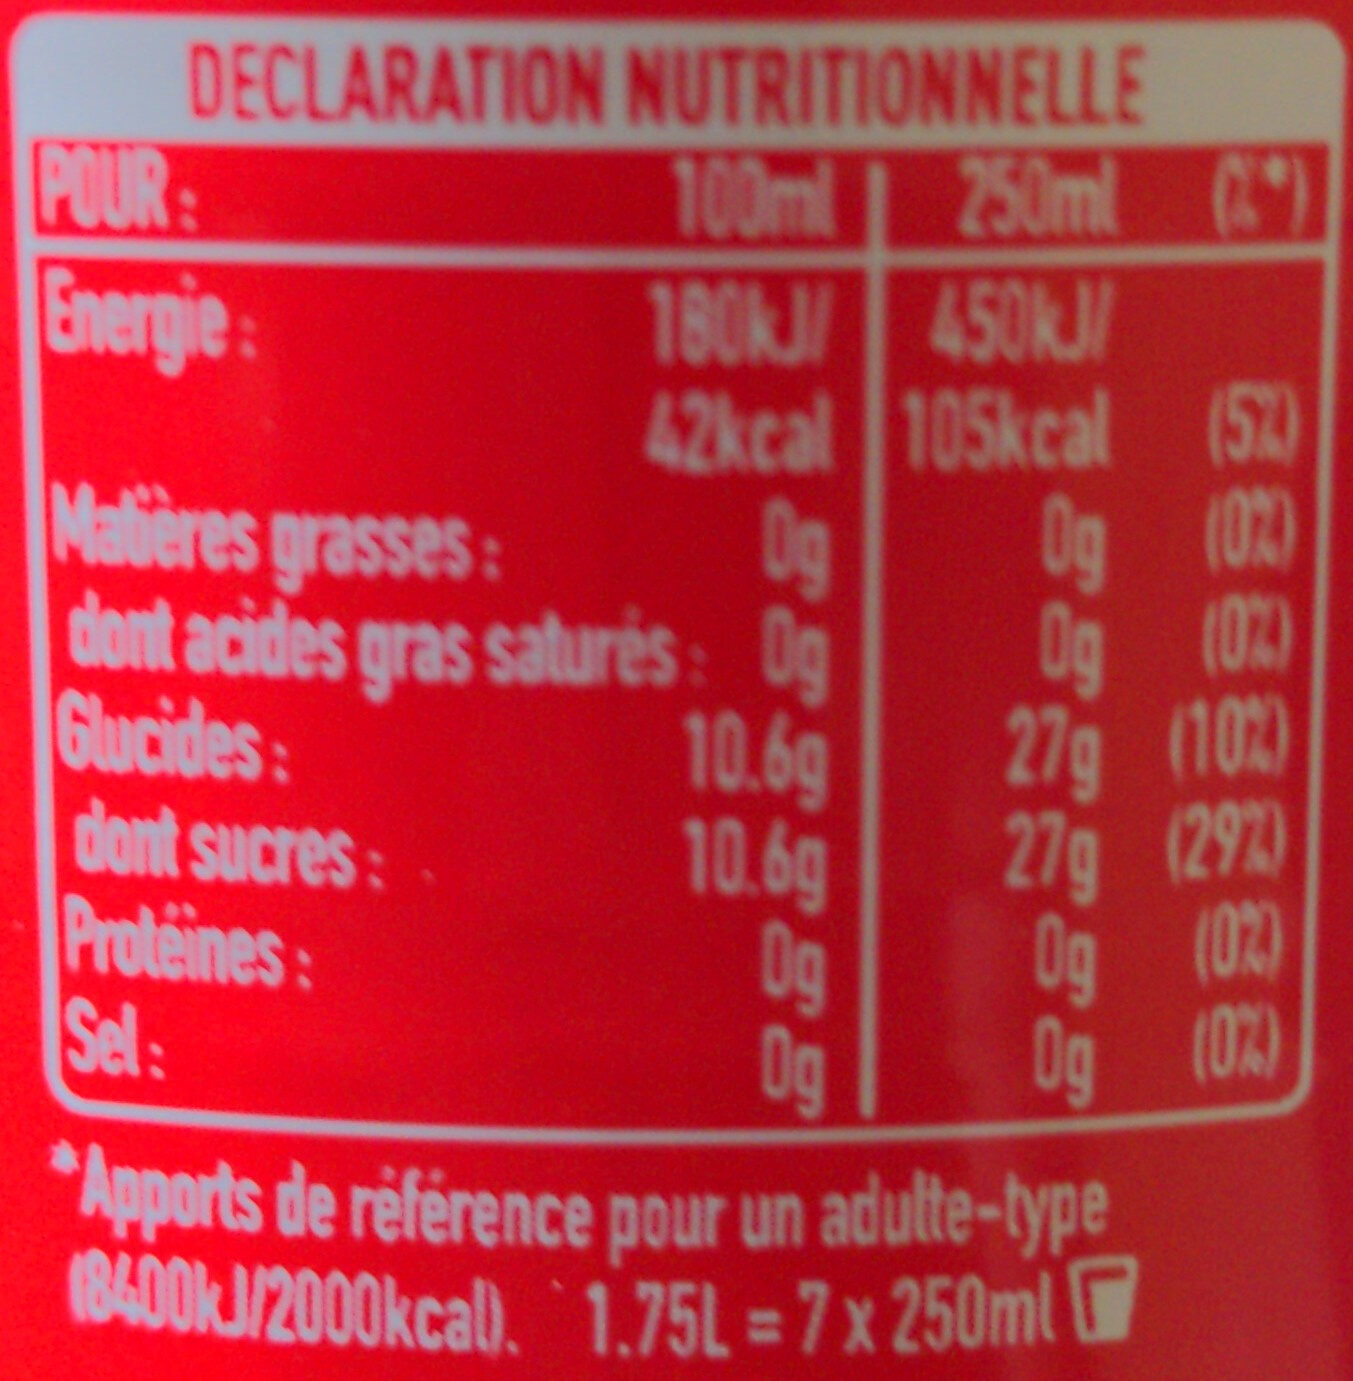 Goût original - Tableau nutritionnel - fr